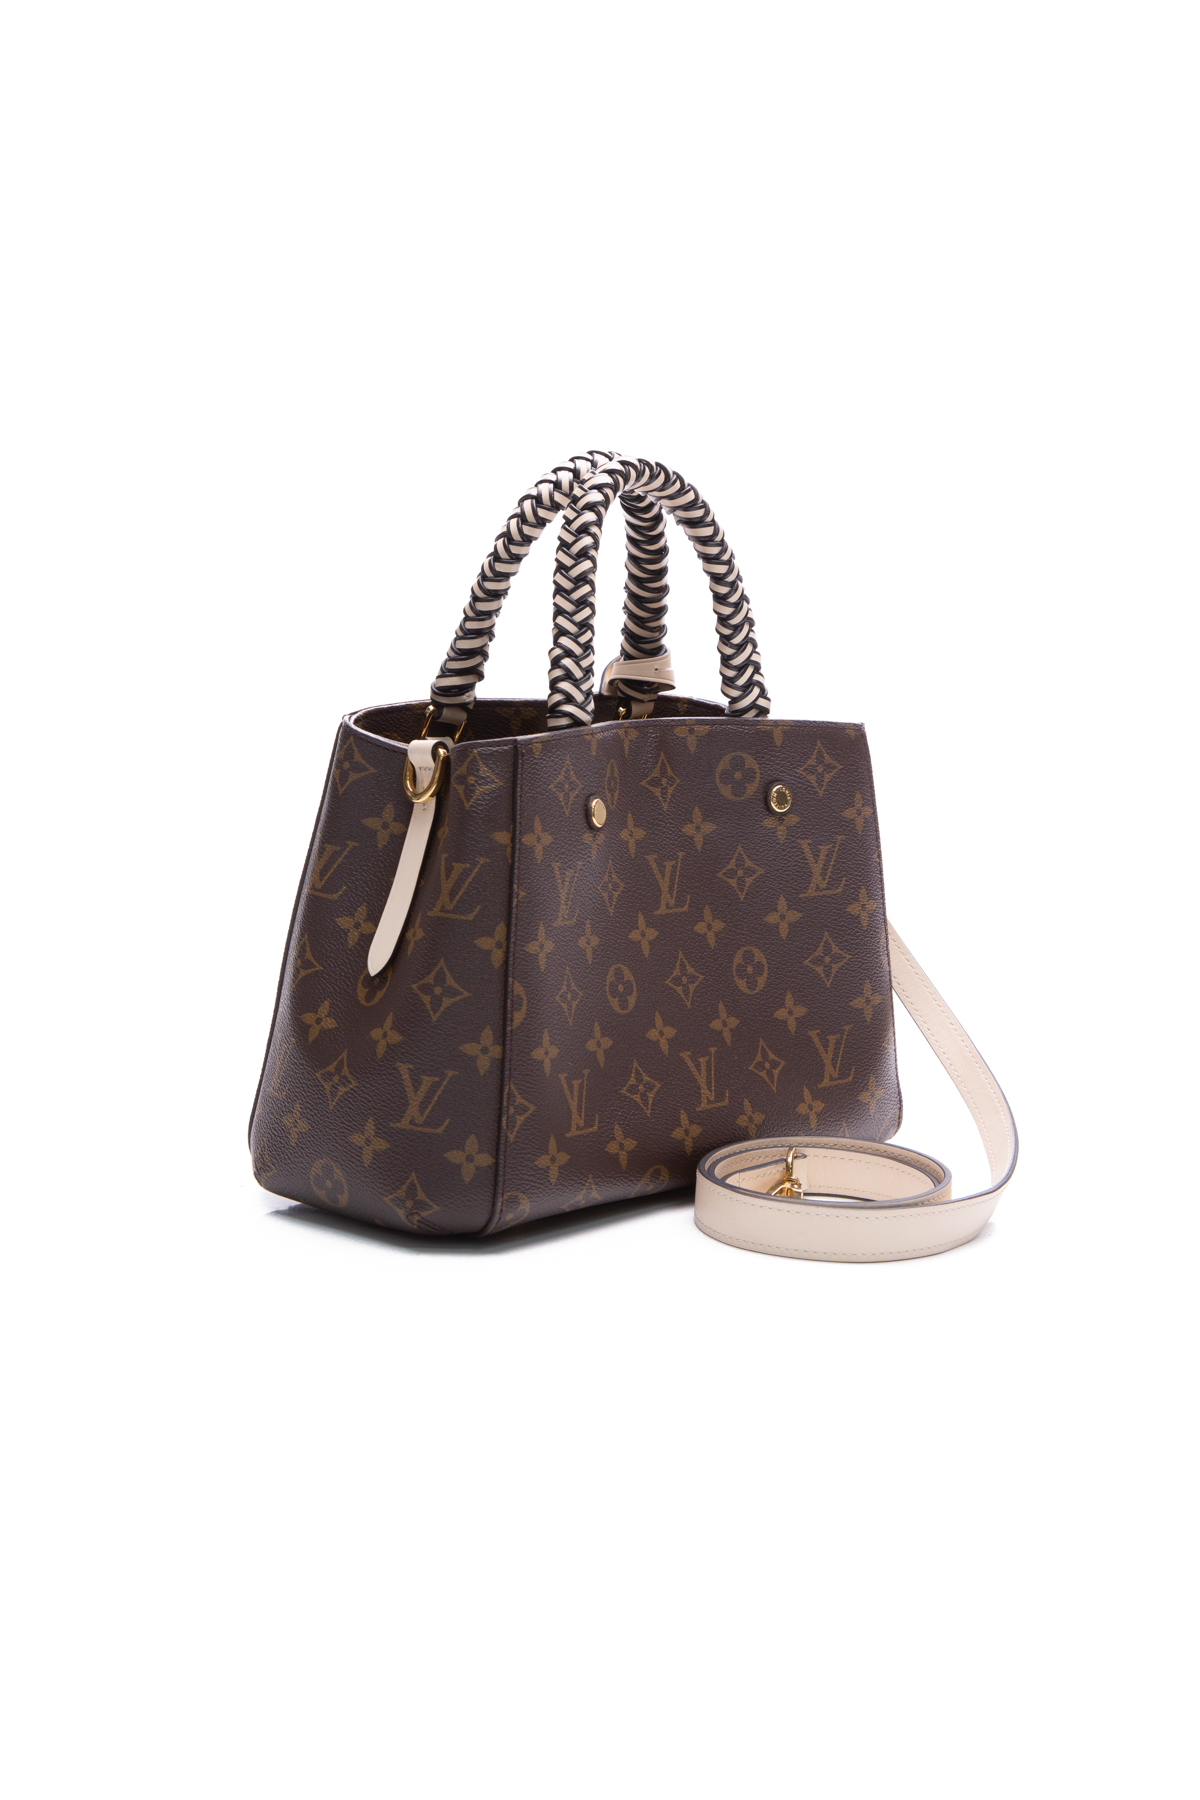 louis vuitton handbag with braided handle